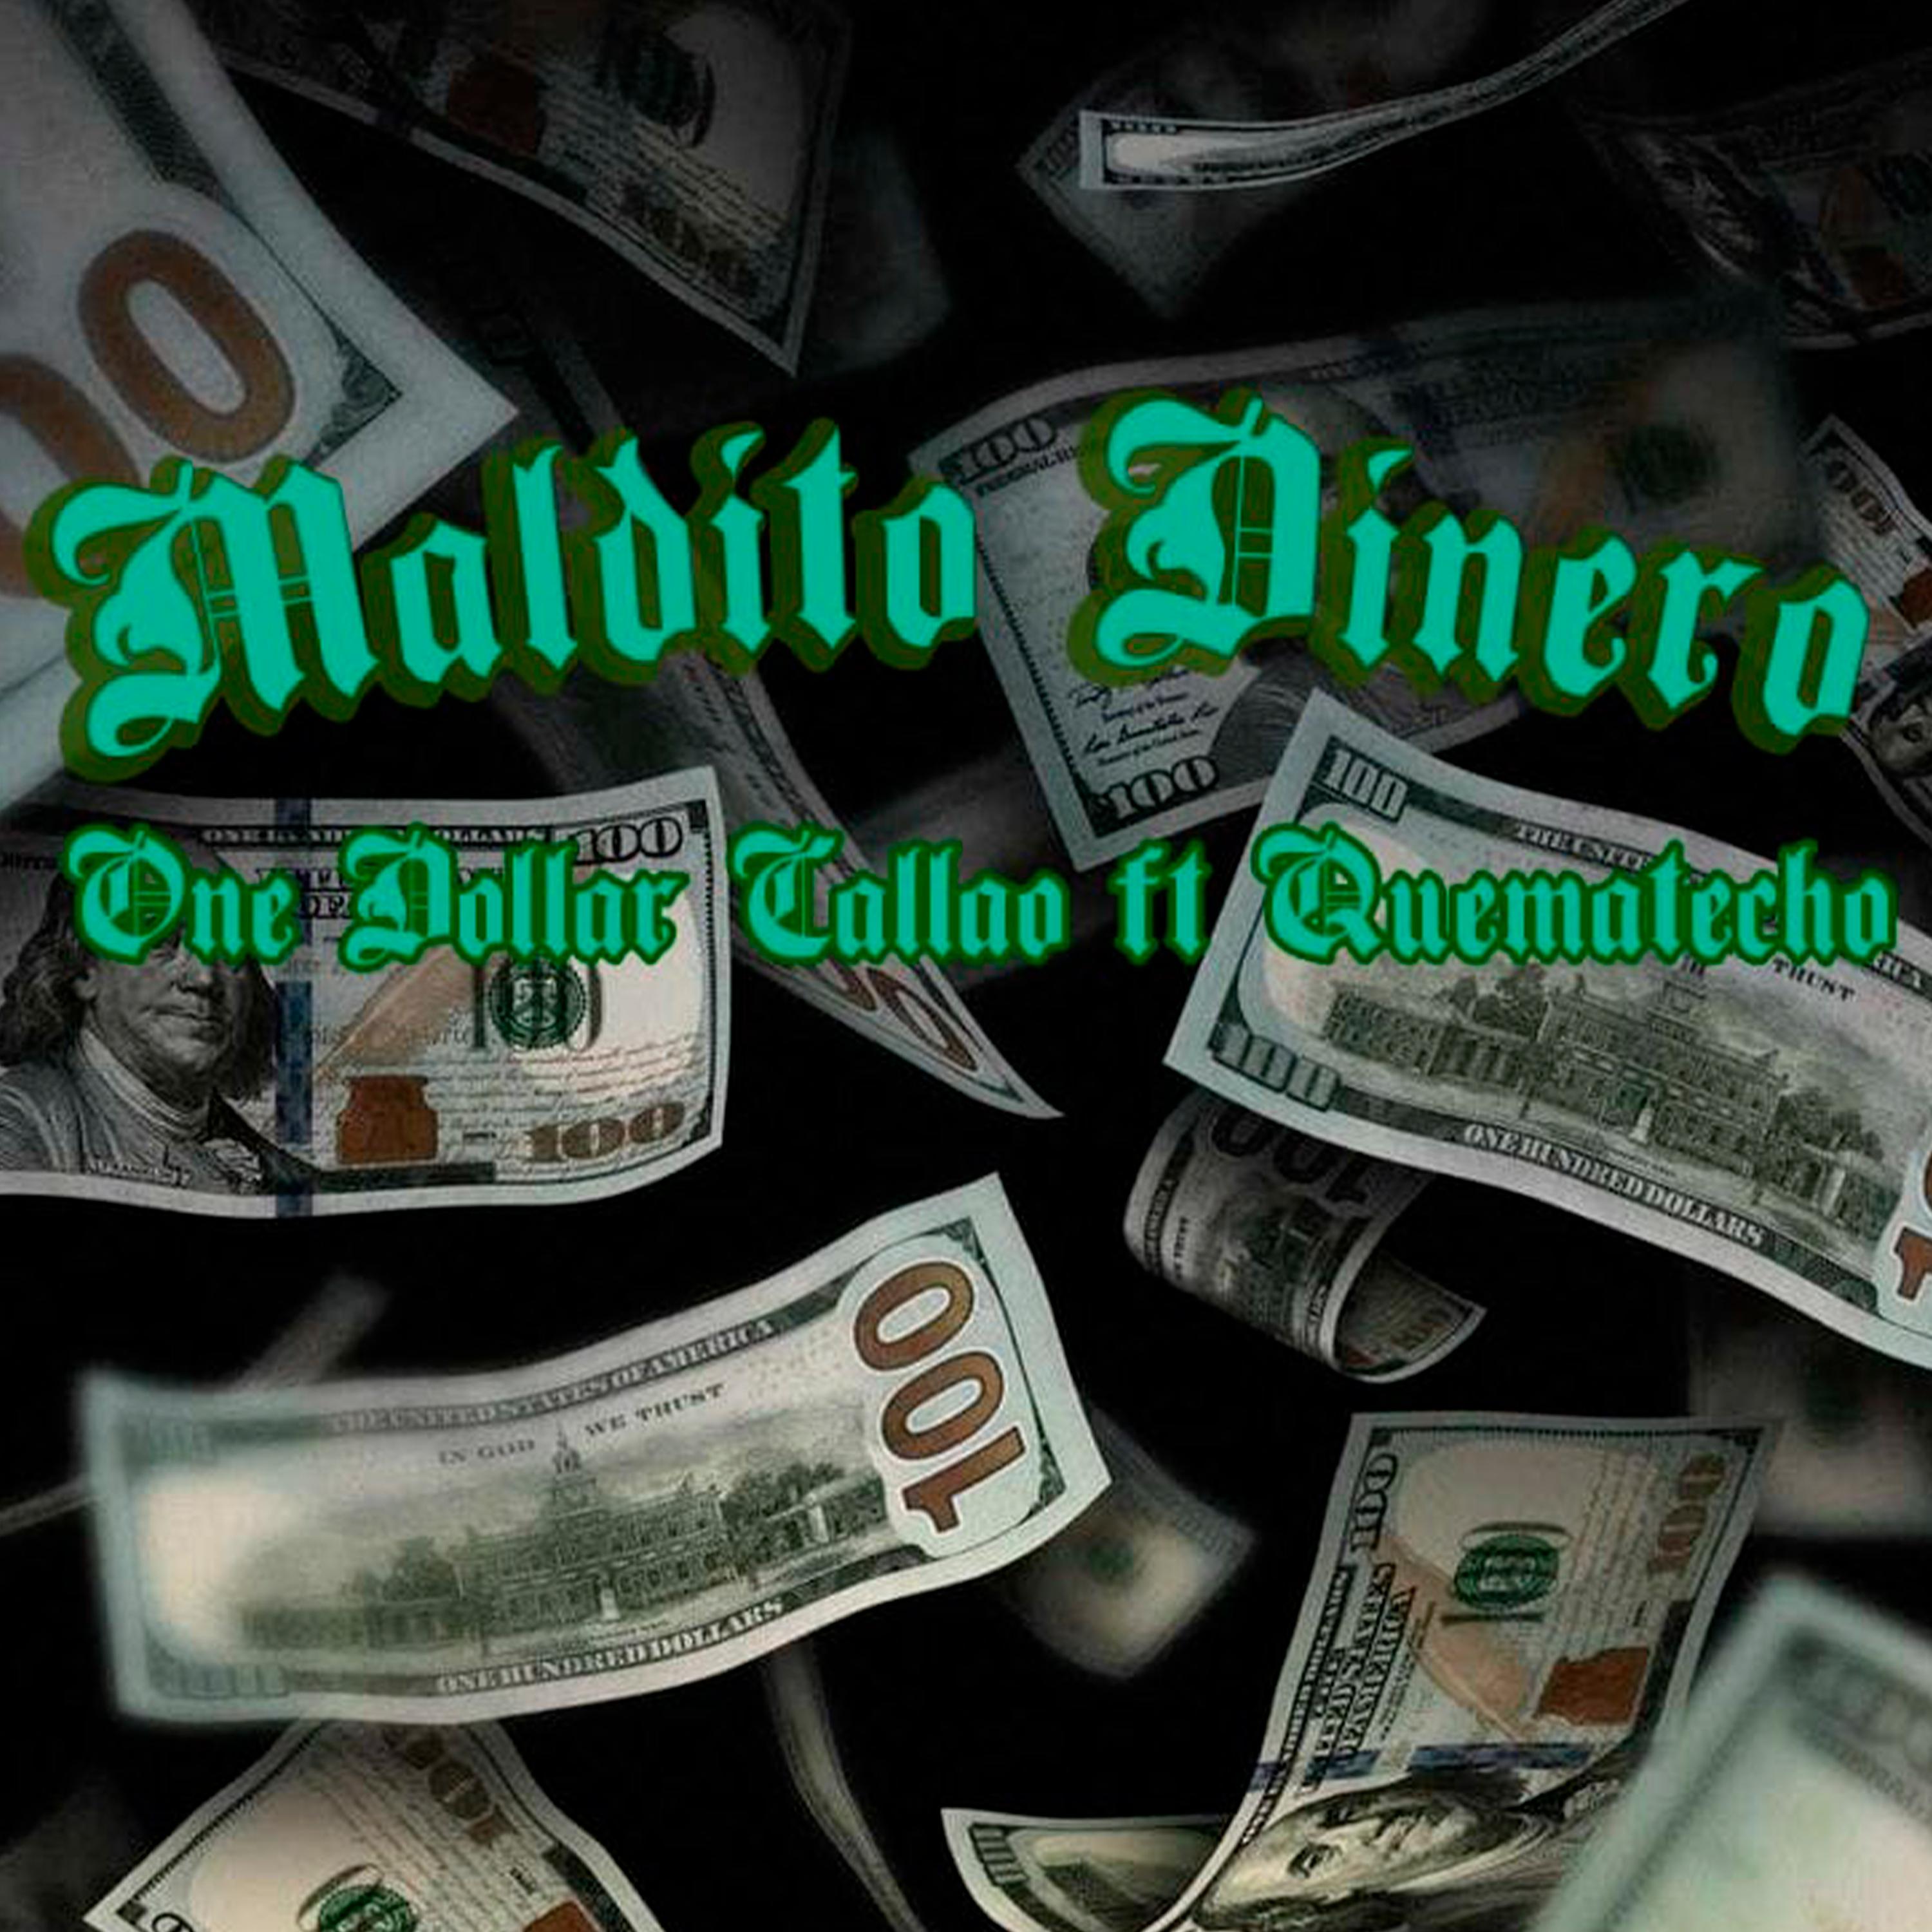 Постер альбома Maldito Dinero